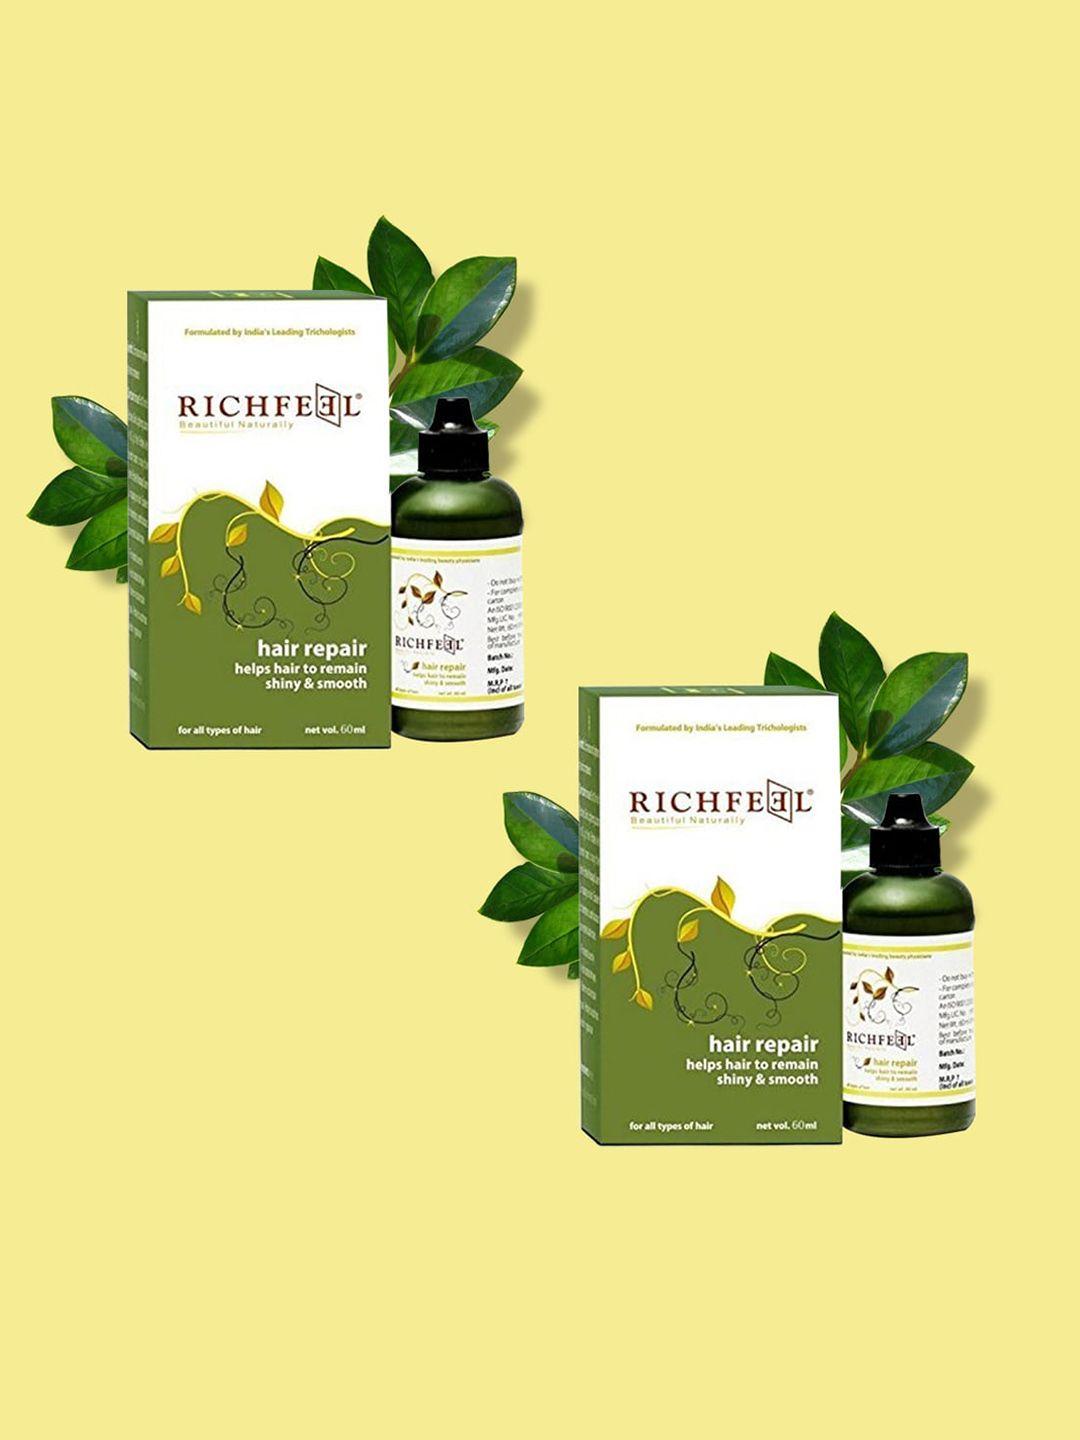 richfeel set of 2 hair repair serum for shiny & smooth hair - 60 ml each